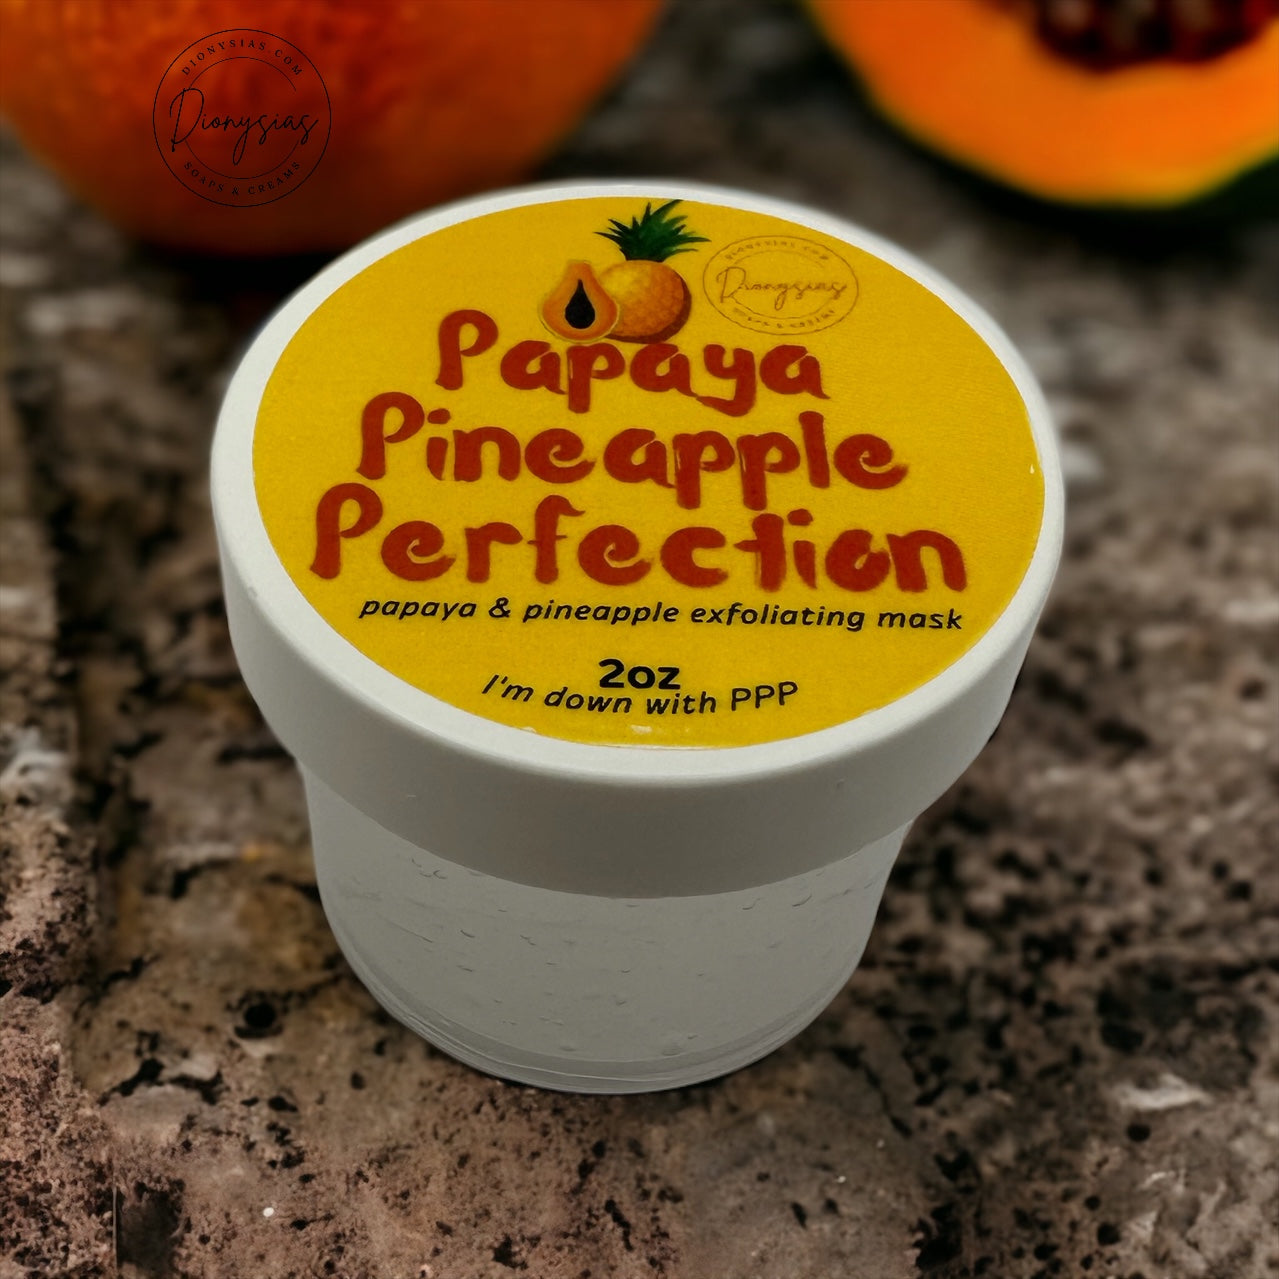 Papaya & Pineapple Perfection